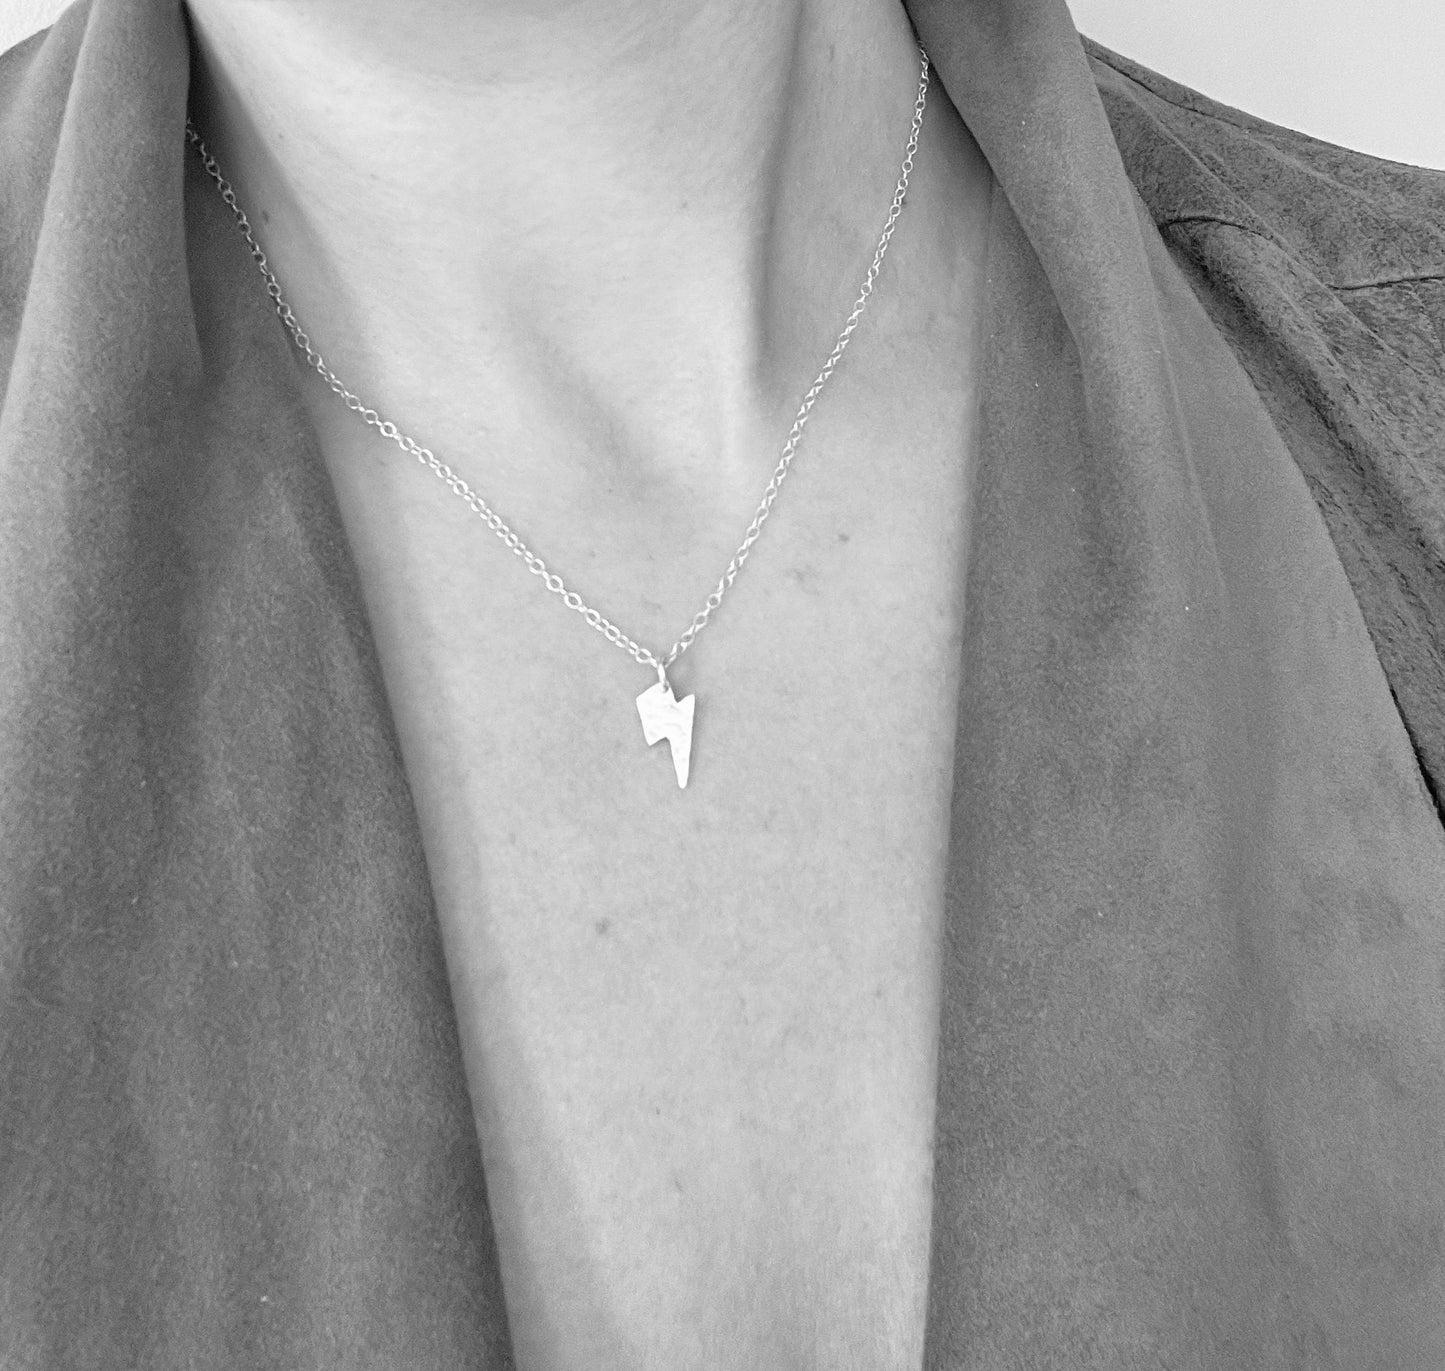 Small silver lightning bolt necklace